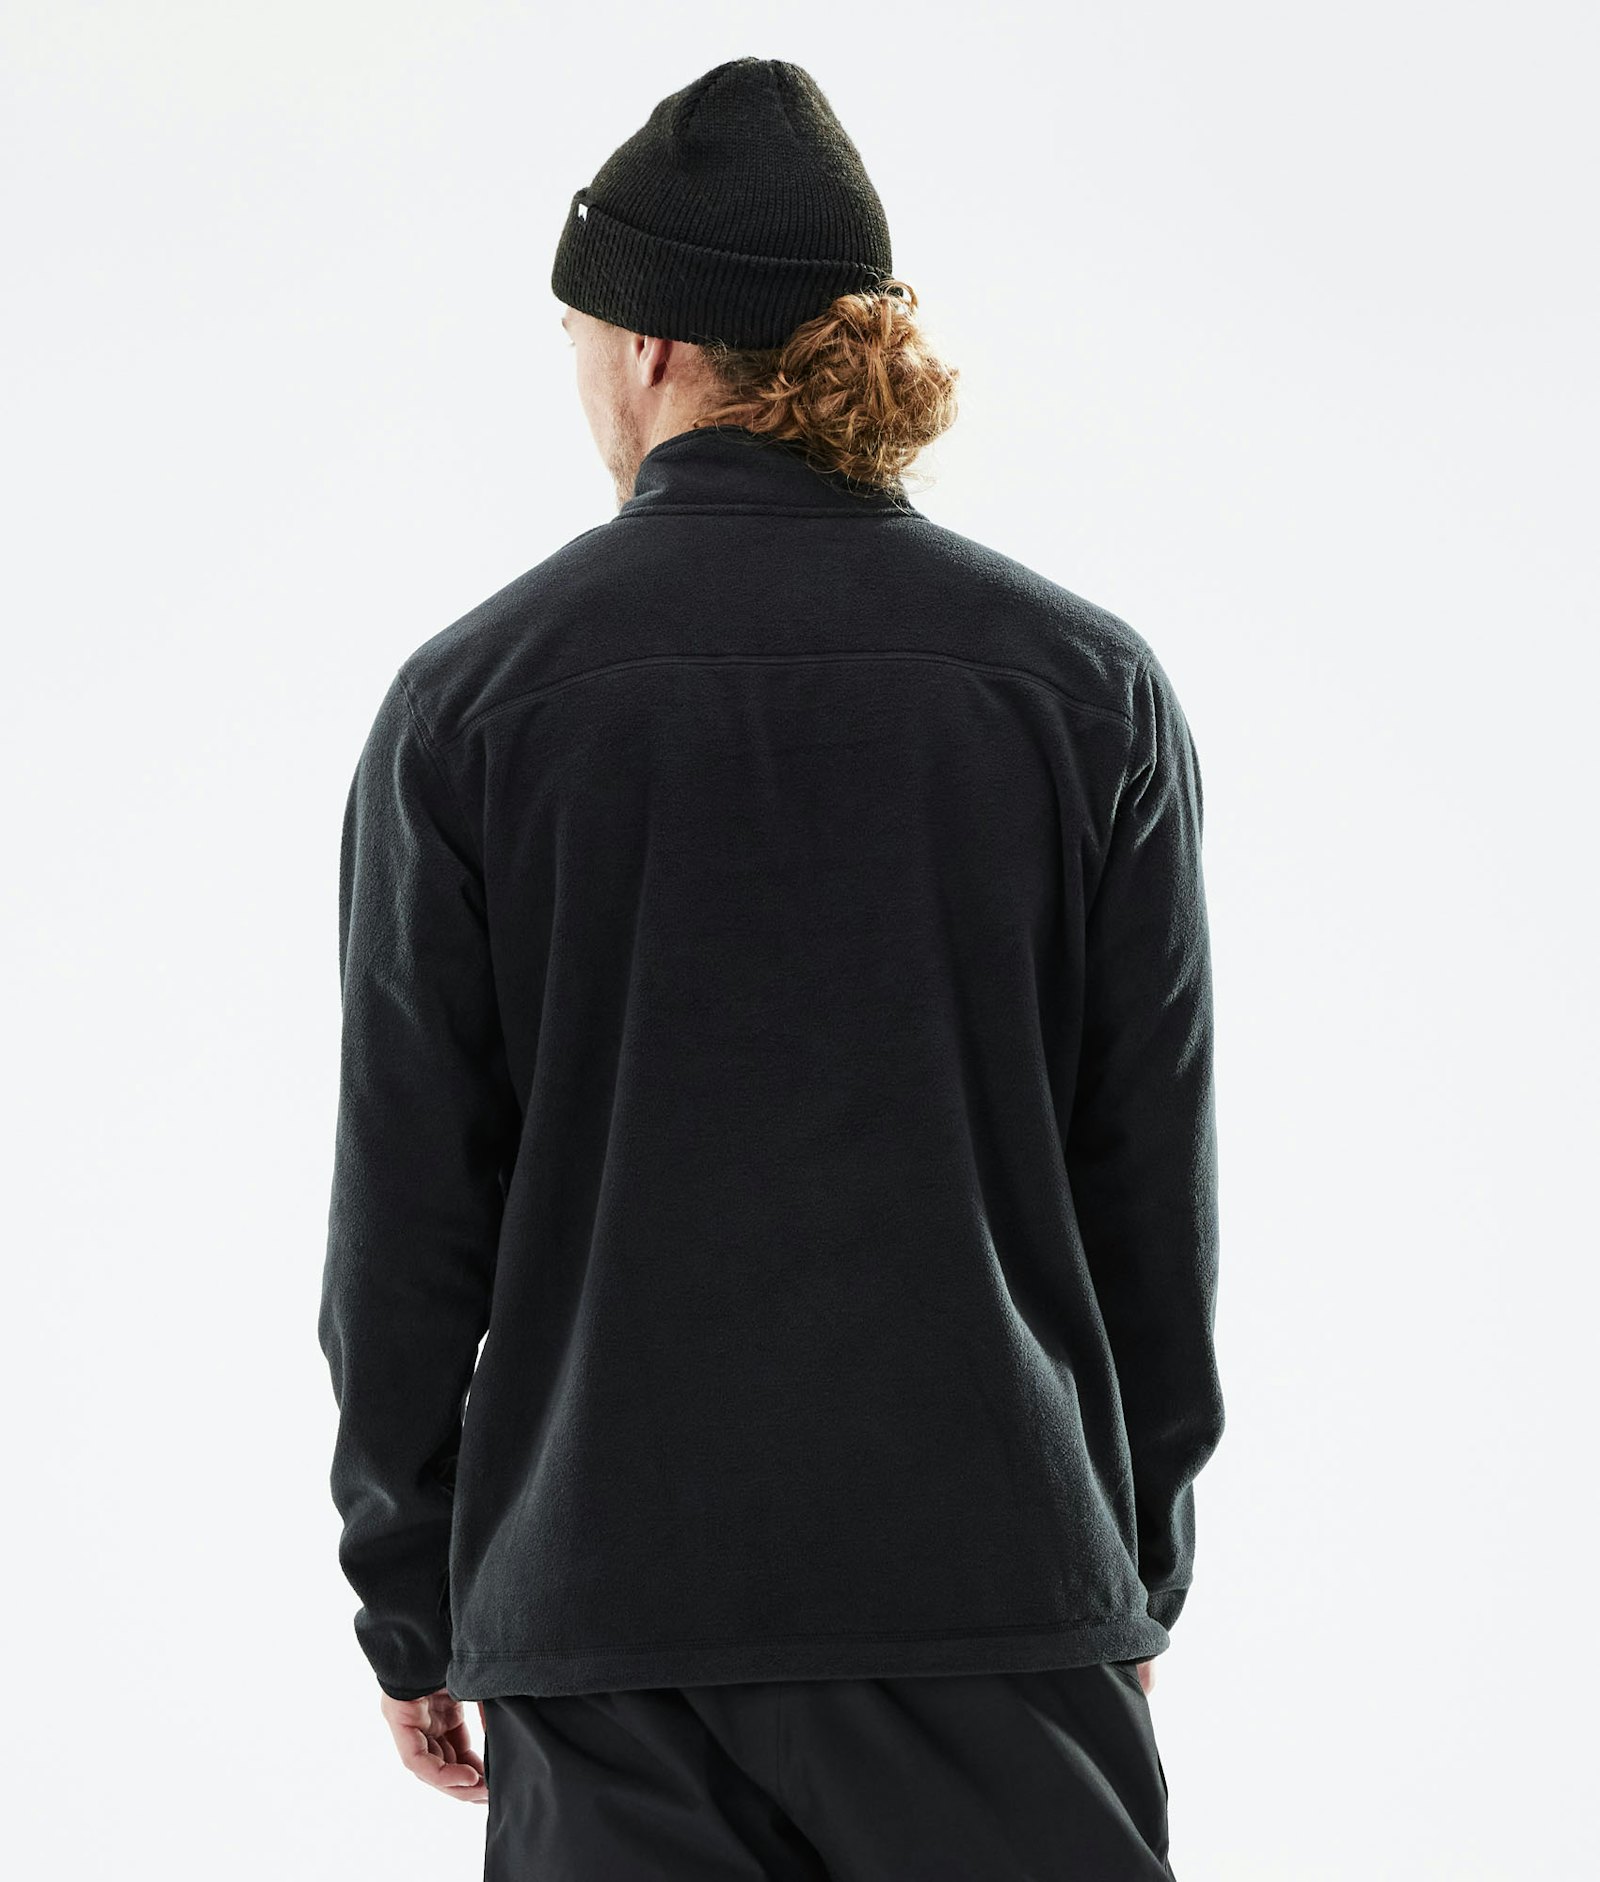 Echo 2021 Fleece Sweater Men Black Renewed